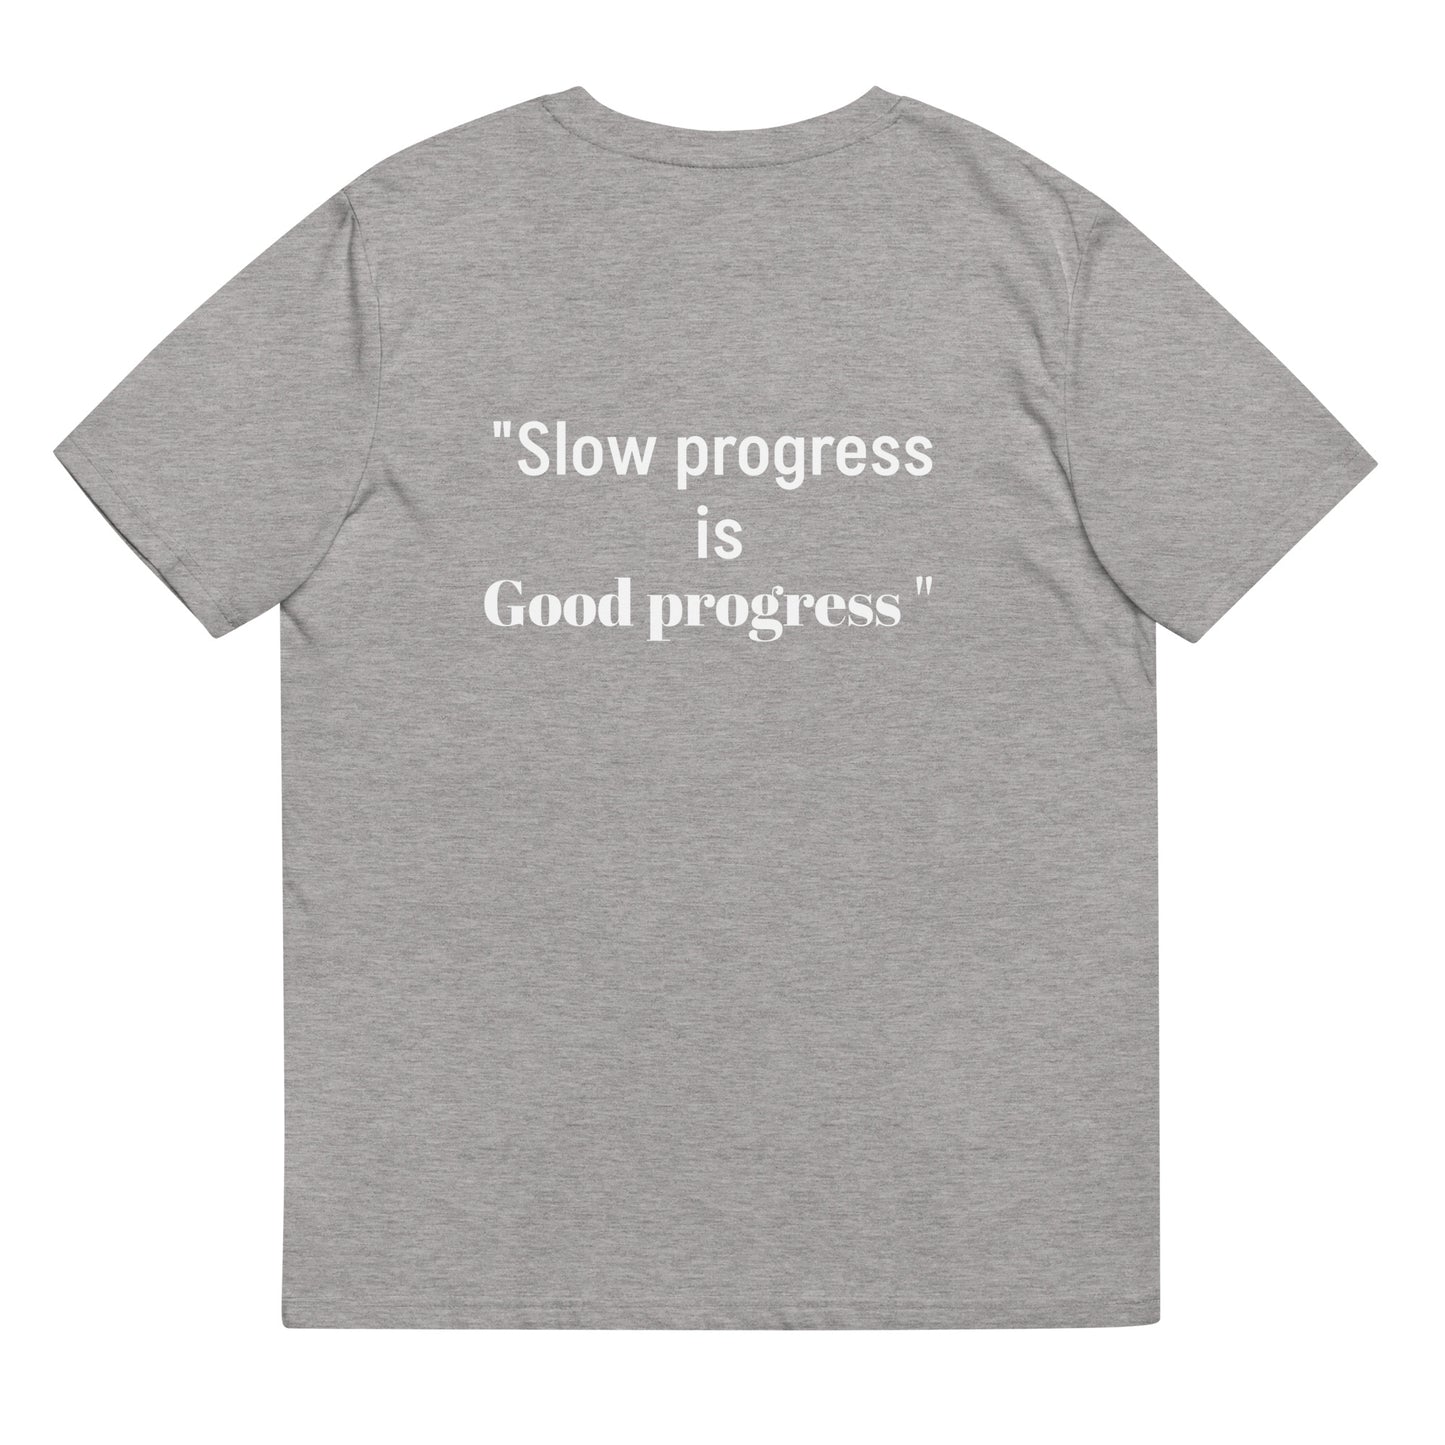 Classic tee "Slow progress is good progress"